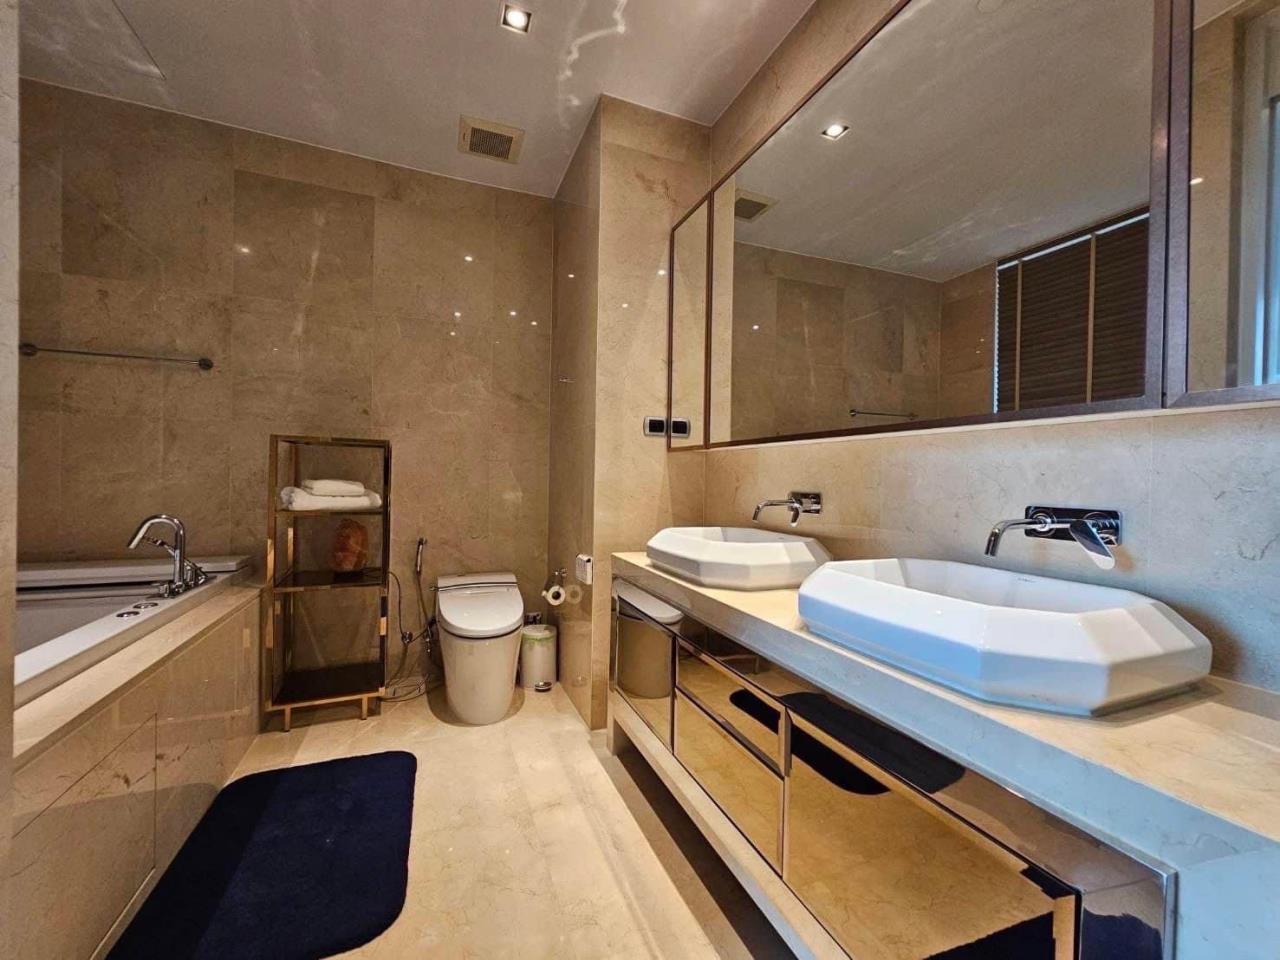 3 bedrooms 3 bathrooms at marque sukhumvit 39 for rent